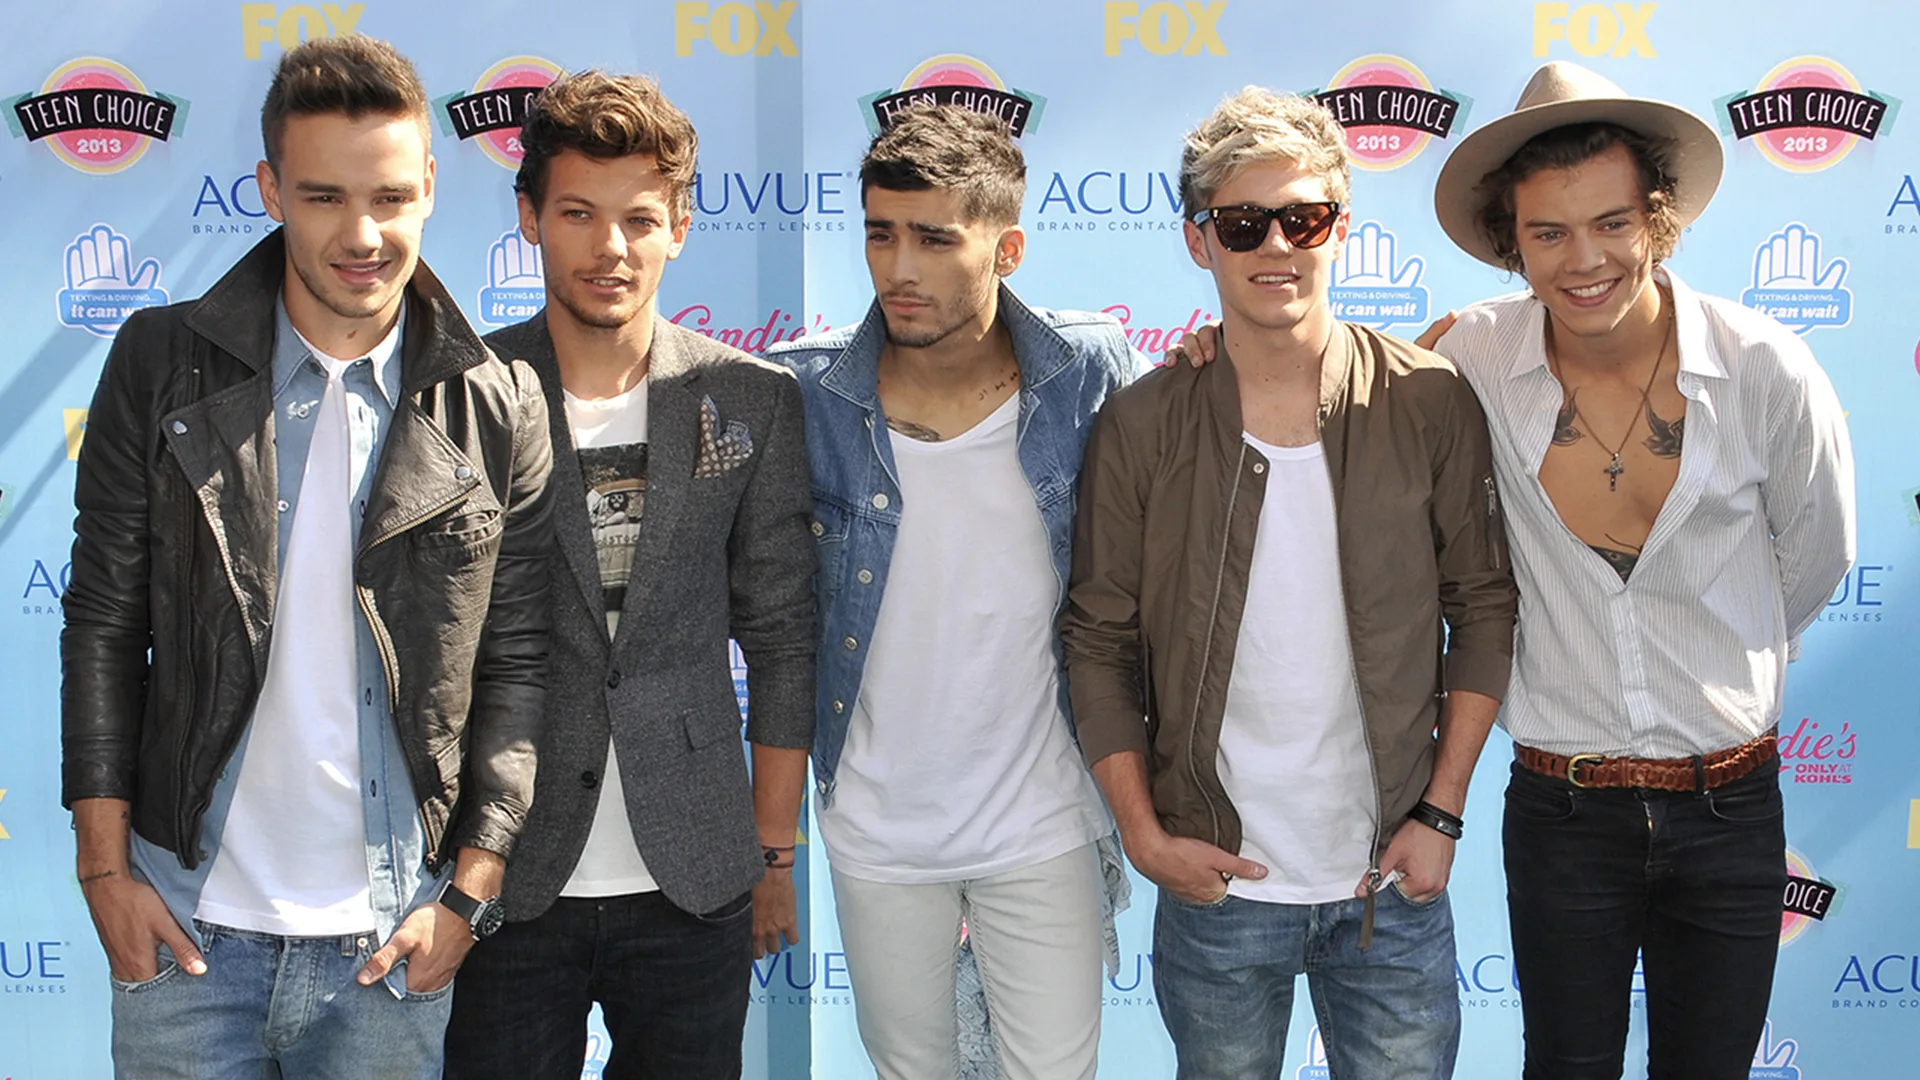 One Direction (L-R) Liam Payne, Louis Tomlinson, Zayn Malik, Niall Horan and Harry Styles